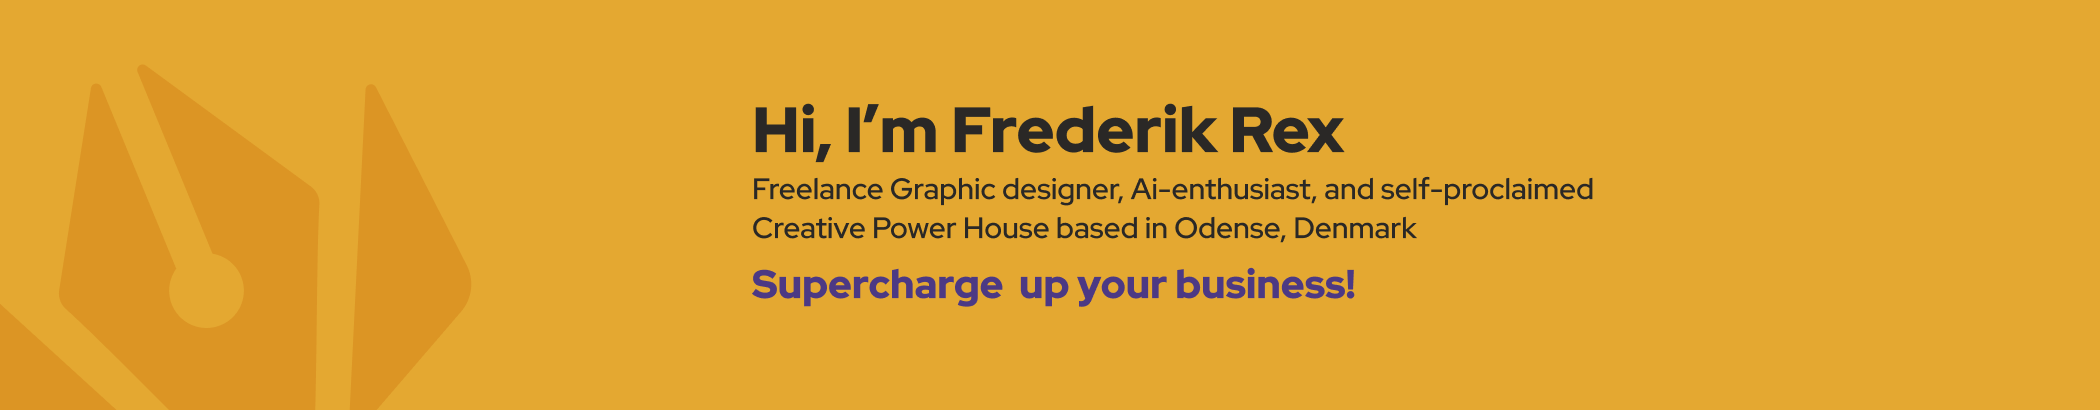 Frederik Rex's profile banner